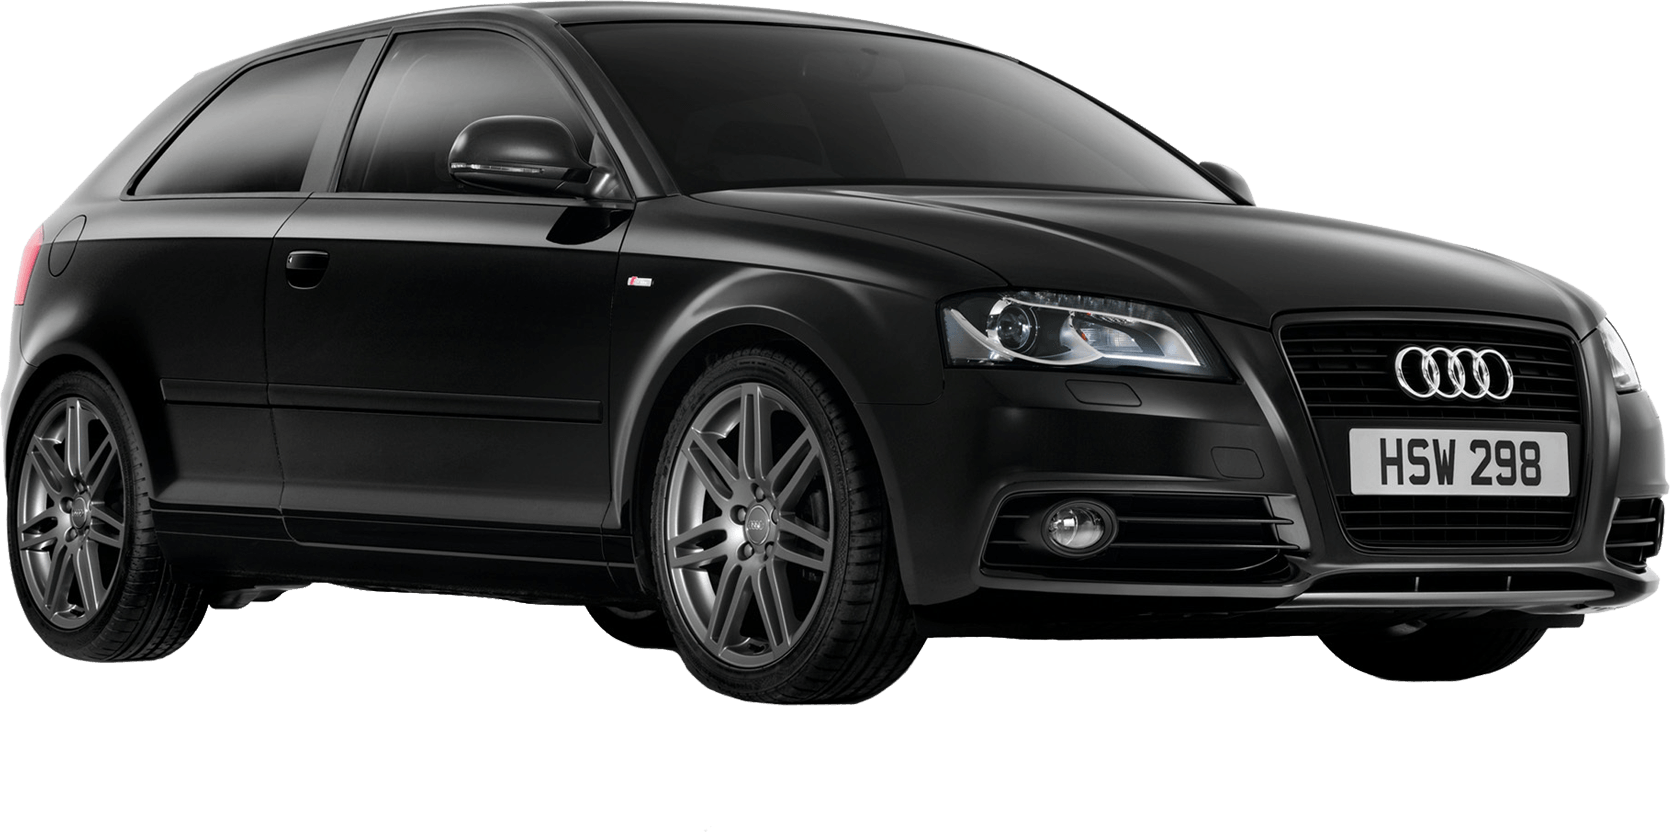 Black Audi Png Car Image PNG Image